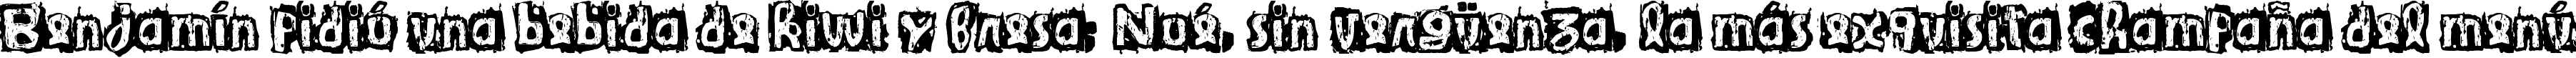 Пример написания шрифтом Guignol's Band текста на испанском